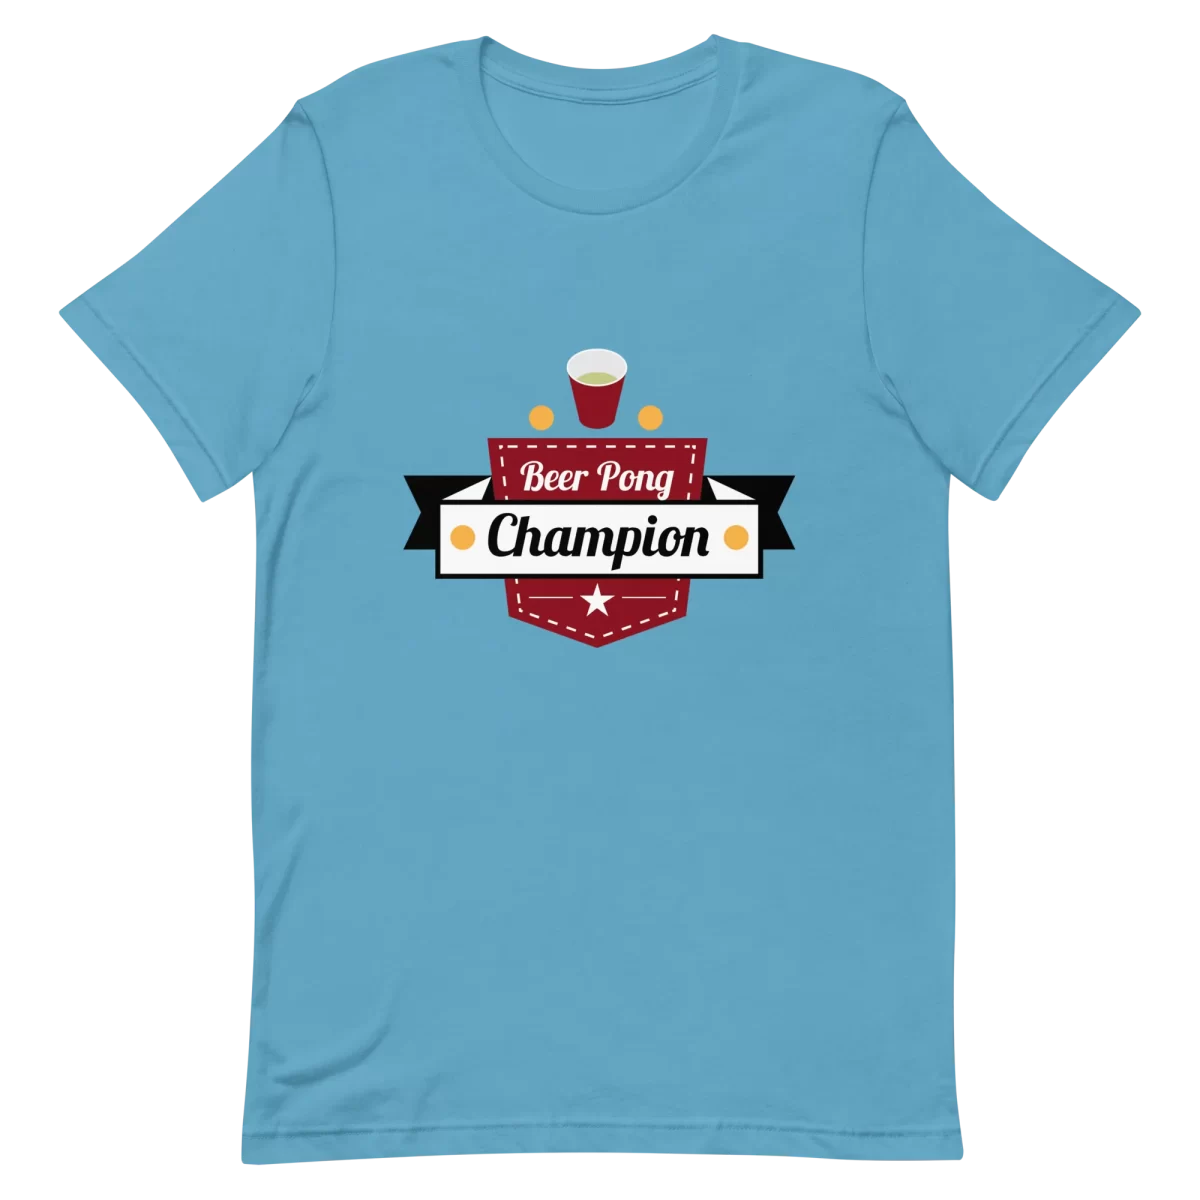 Unisex T-Shirt - Beer Pong Champion - Ocean Blue